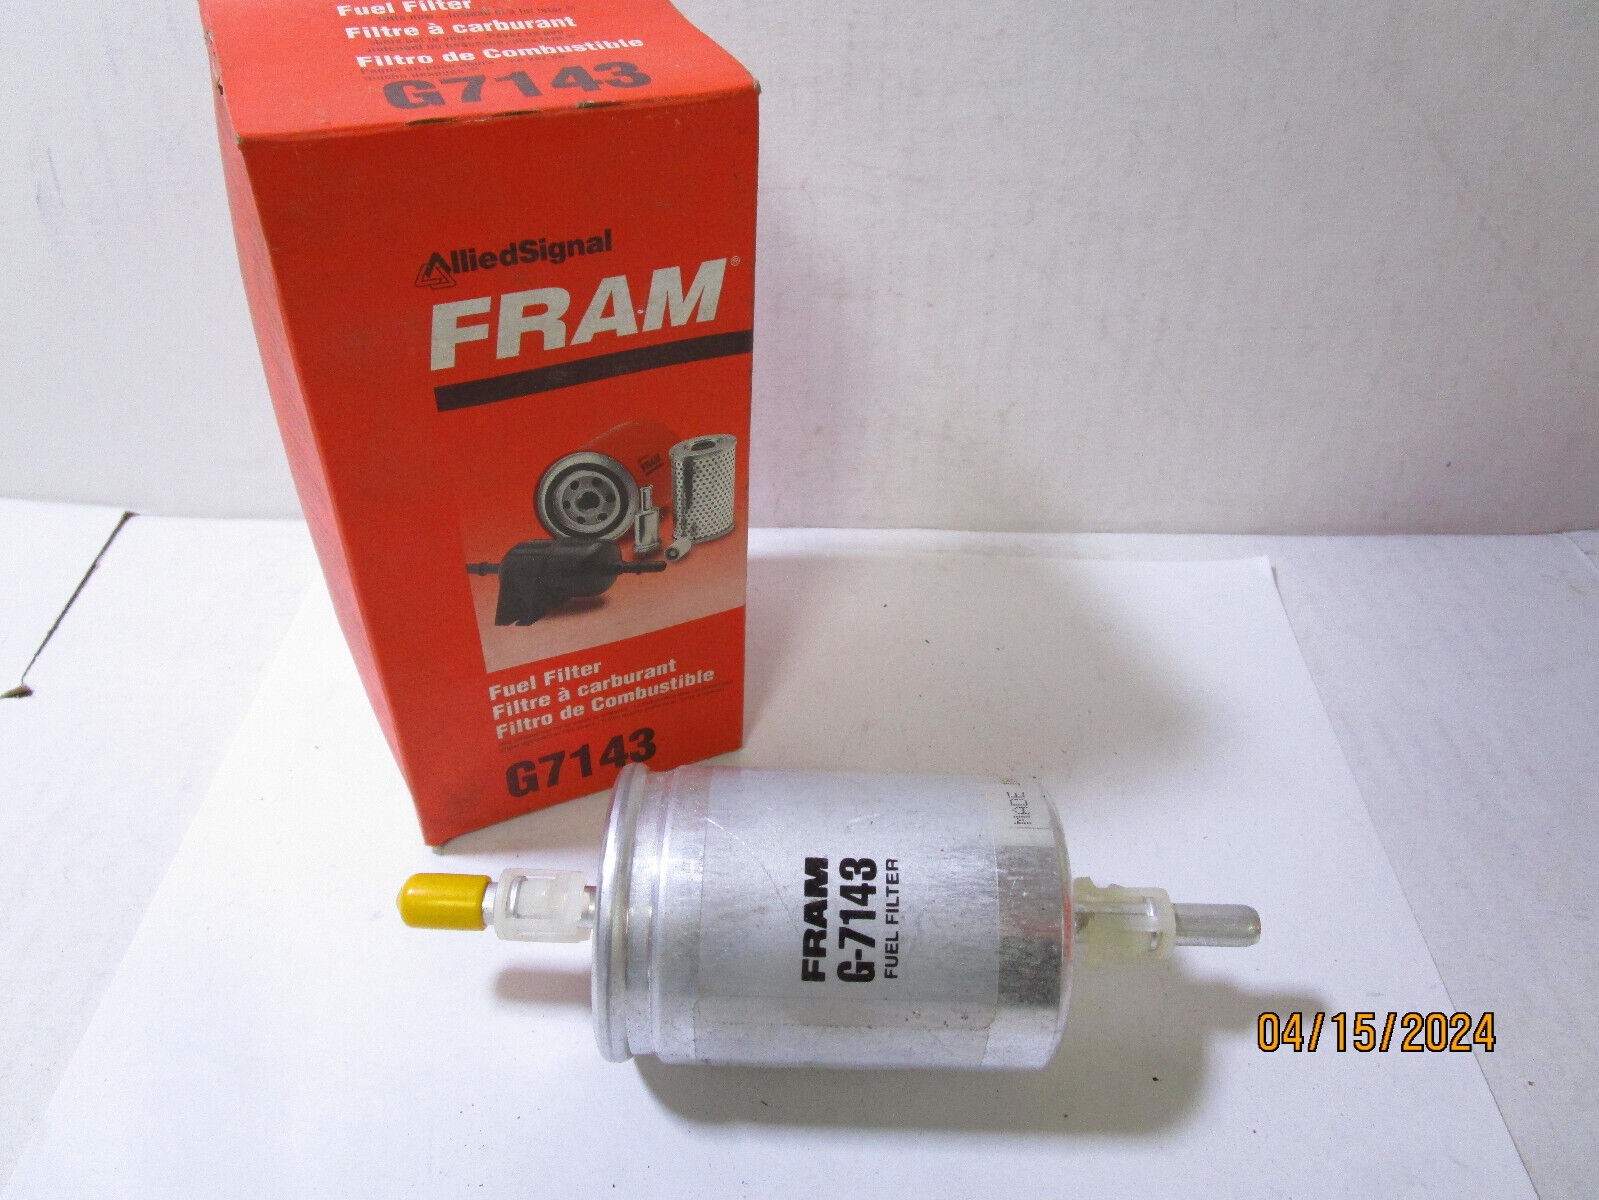 Fuel Filter Fram G7143 (box rough)